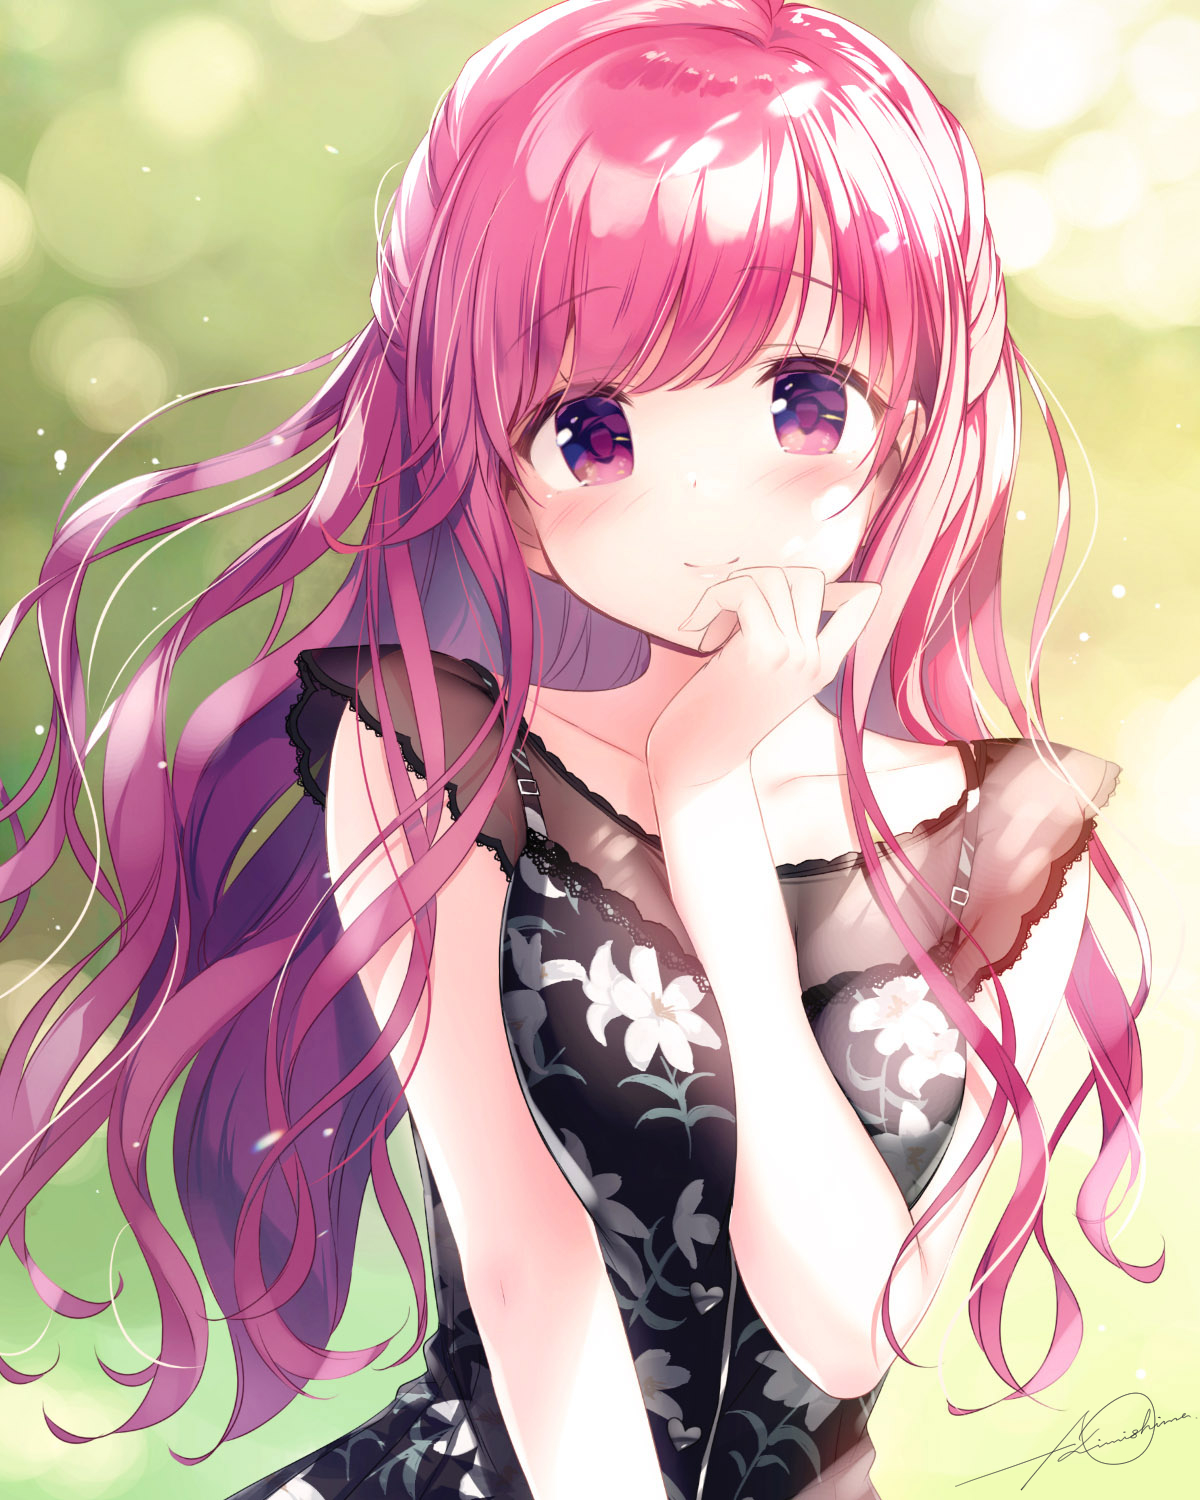 Anime Girl Pink Hair Wallpapers